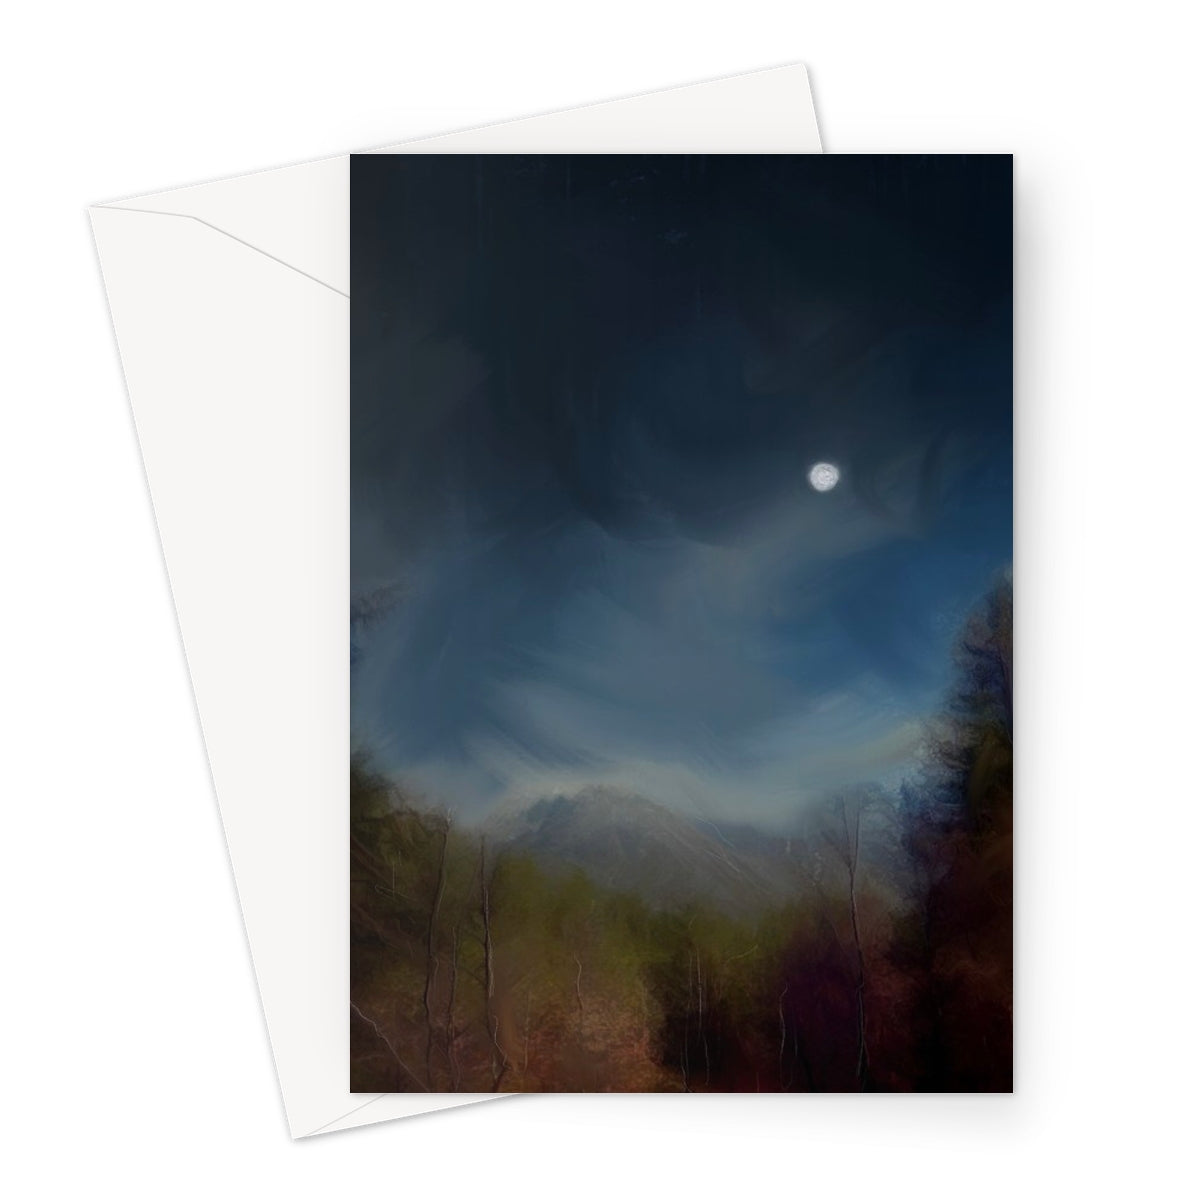 Glencoe Lochan Moonlight Art Gifts Greeting Card-Greetings Cards-Glencoe Art Gallery-A5 Portrait-1 Card-Paintings, Prints, Homeware, Art Gifts From Scotland By Scottish Artist Kevin Hunter